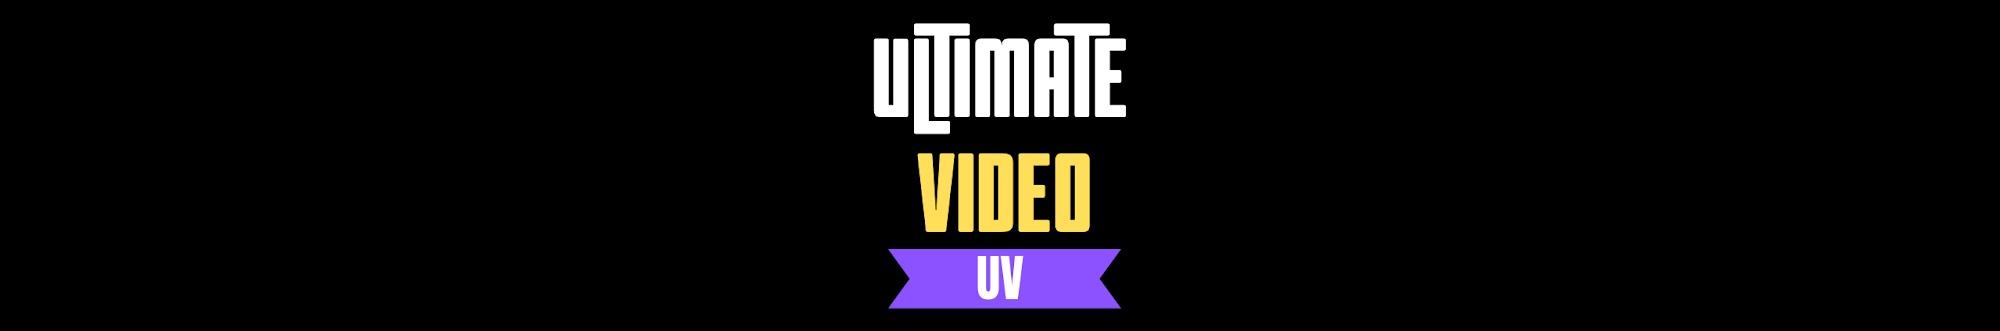 Ultimate Video